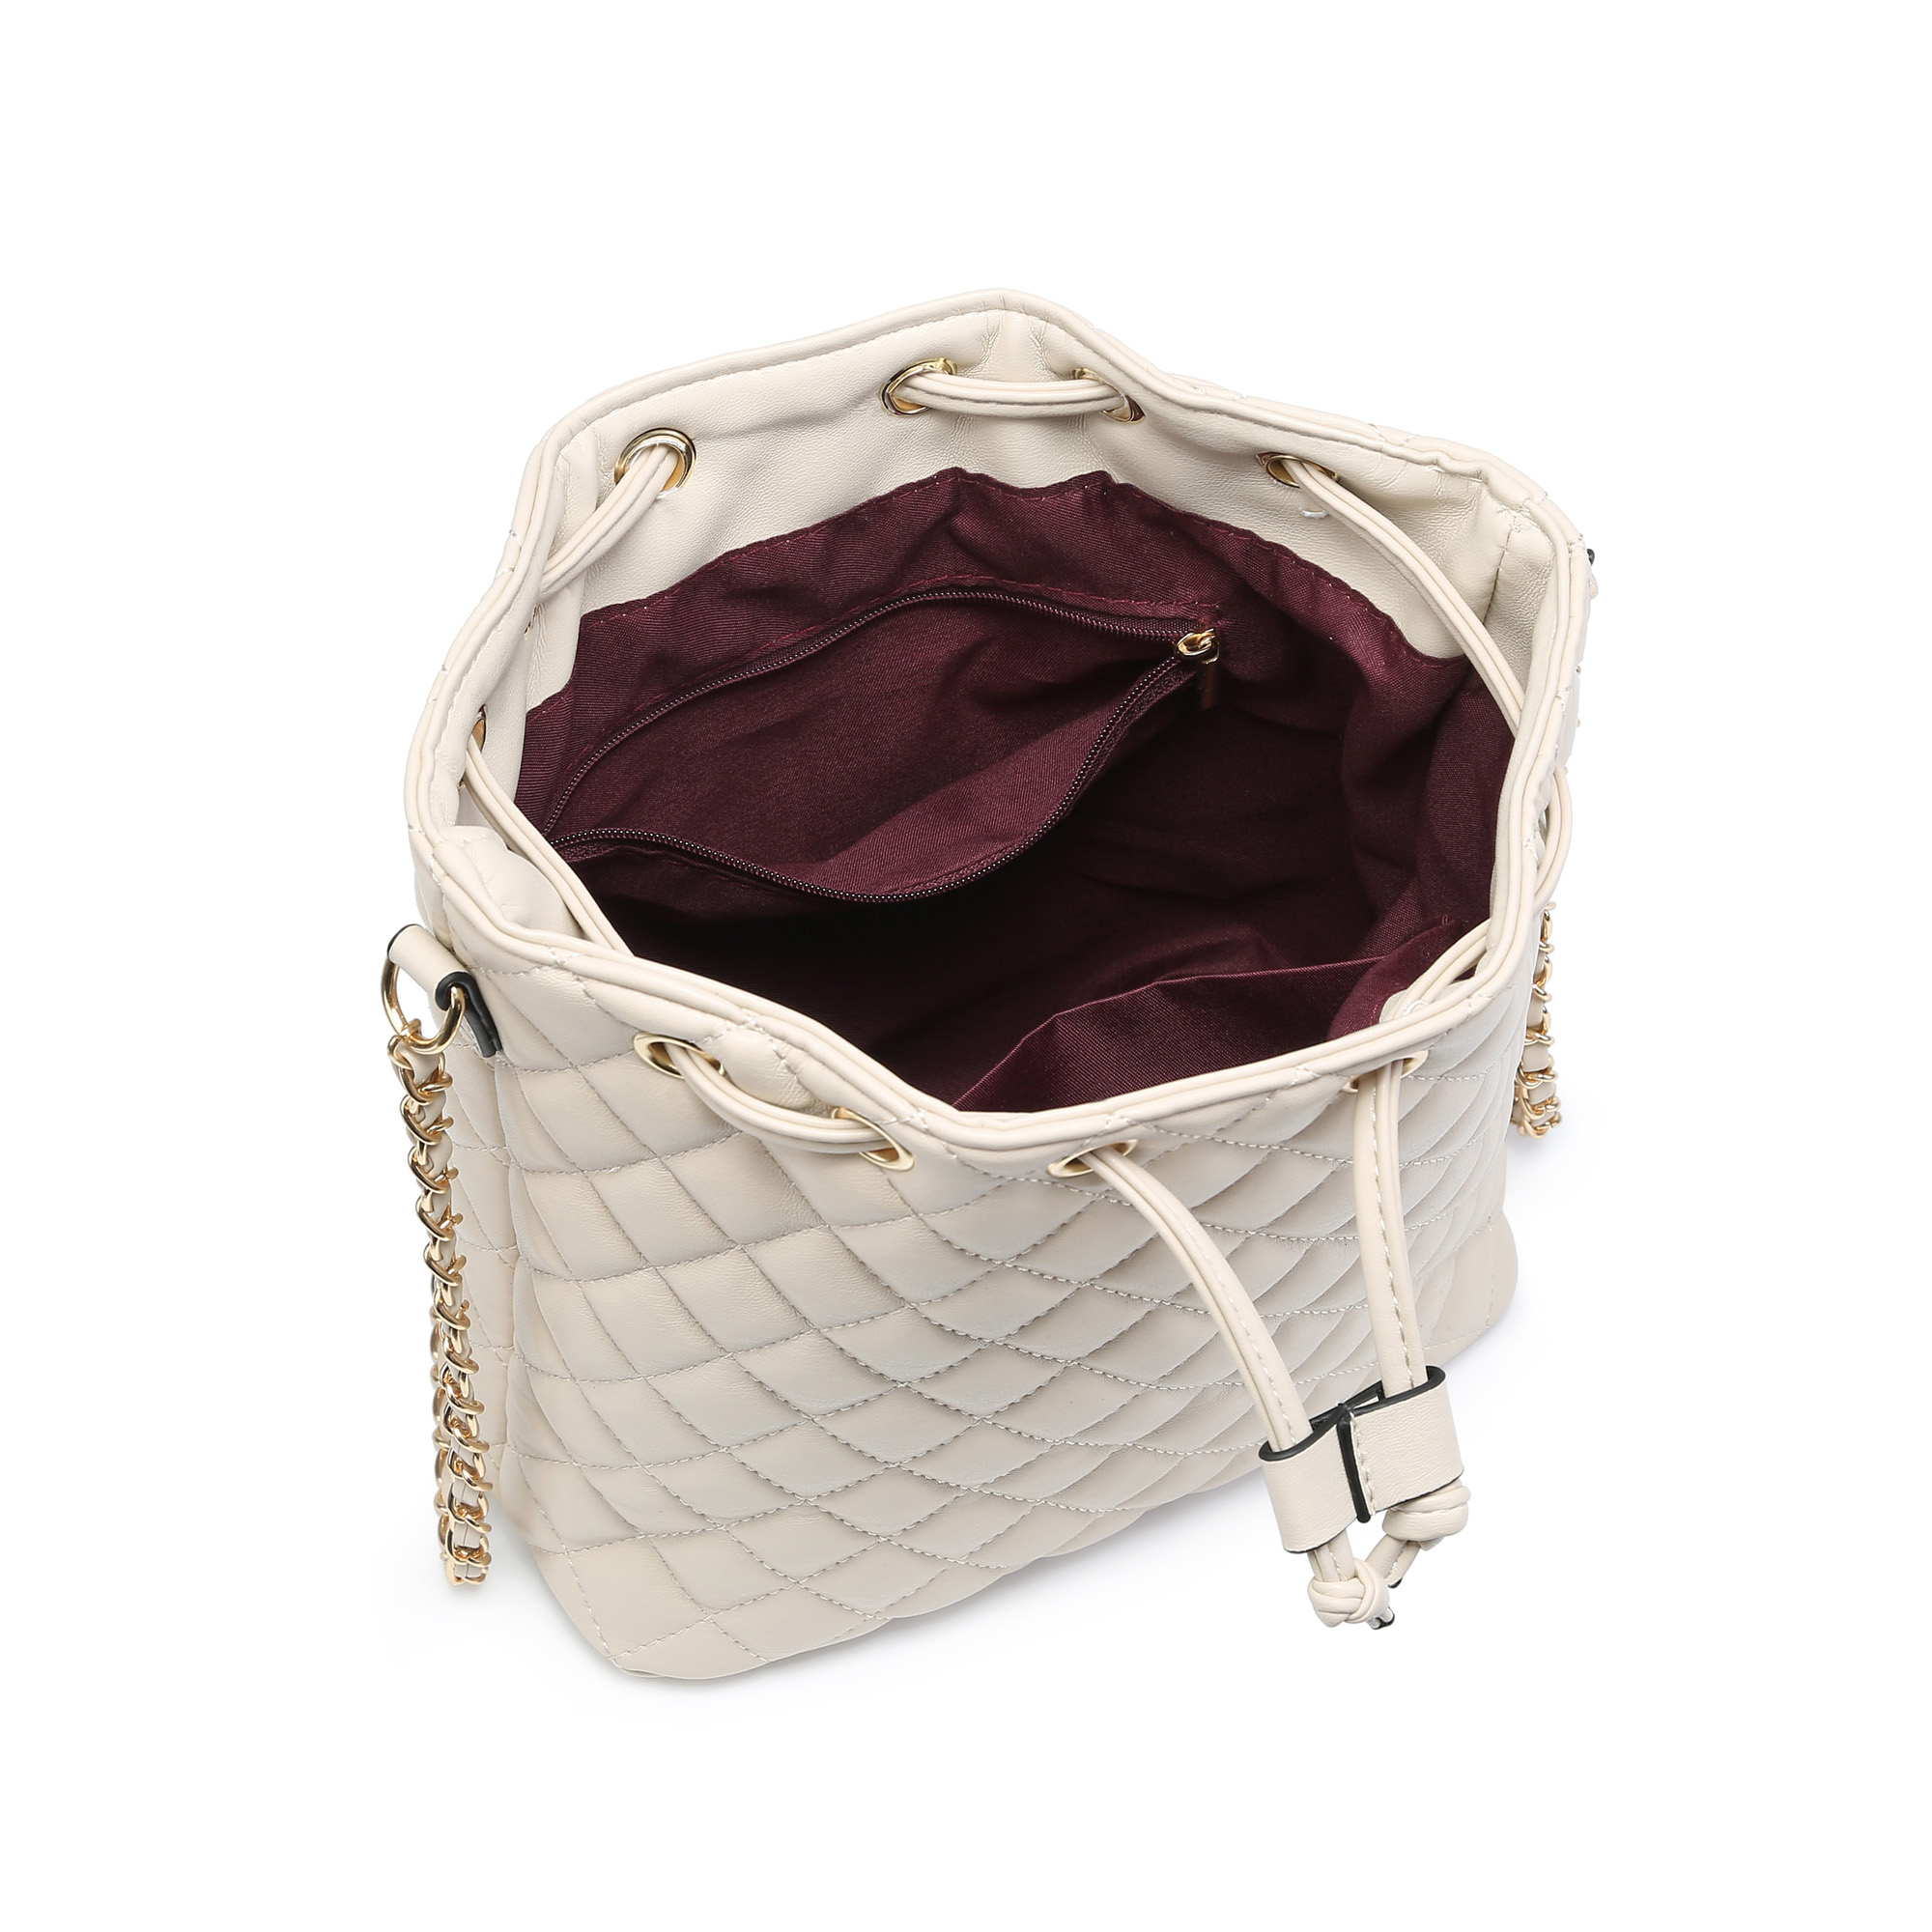 Poppy Womens Leather Quilted Crossbody Bag Handbags Purses Drawstring Bucket Shoulder Bag Satchels Messenger Bag - image 3 of 5